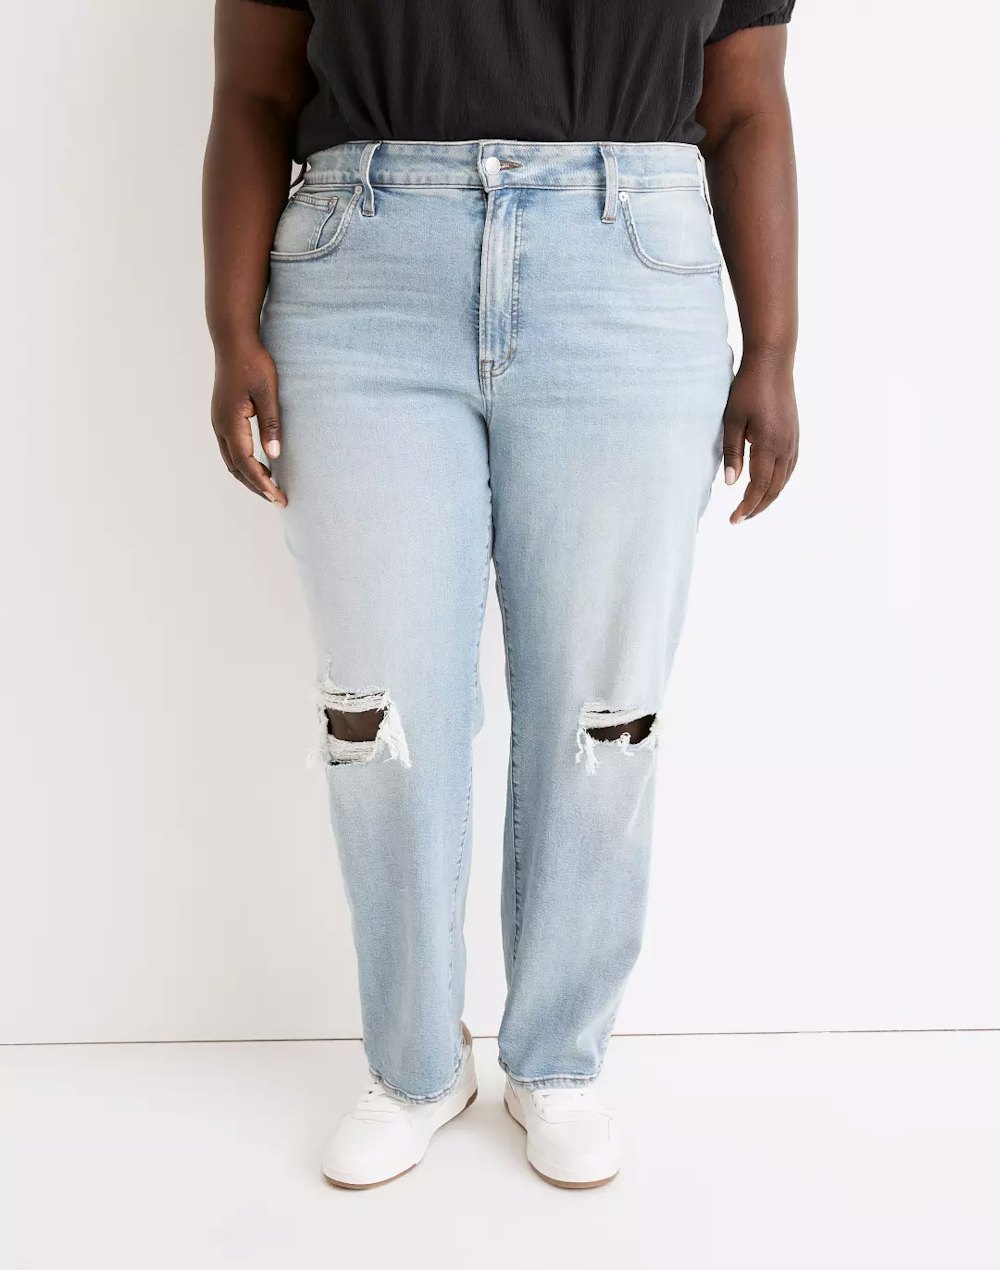 The Plus Curvy Perfect Vintage Jean